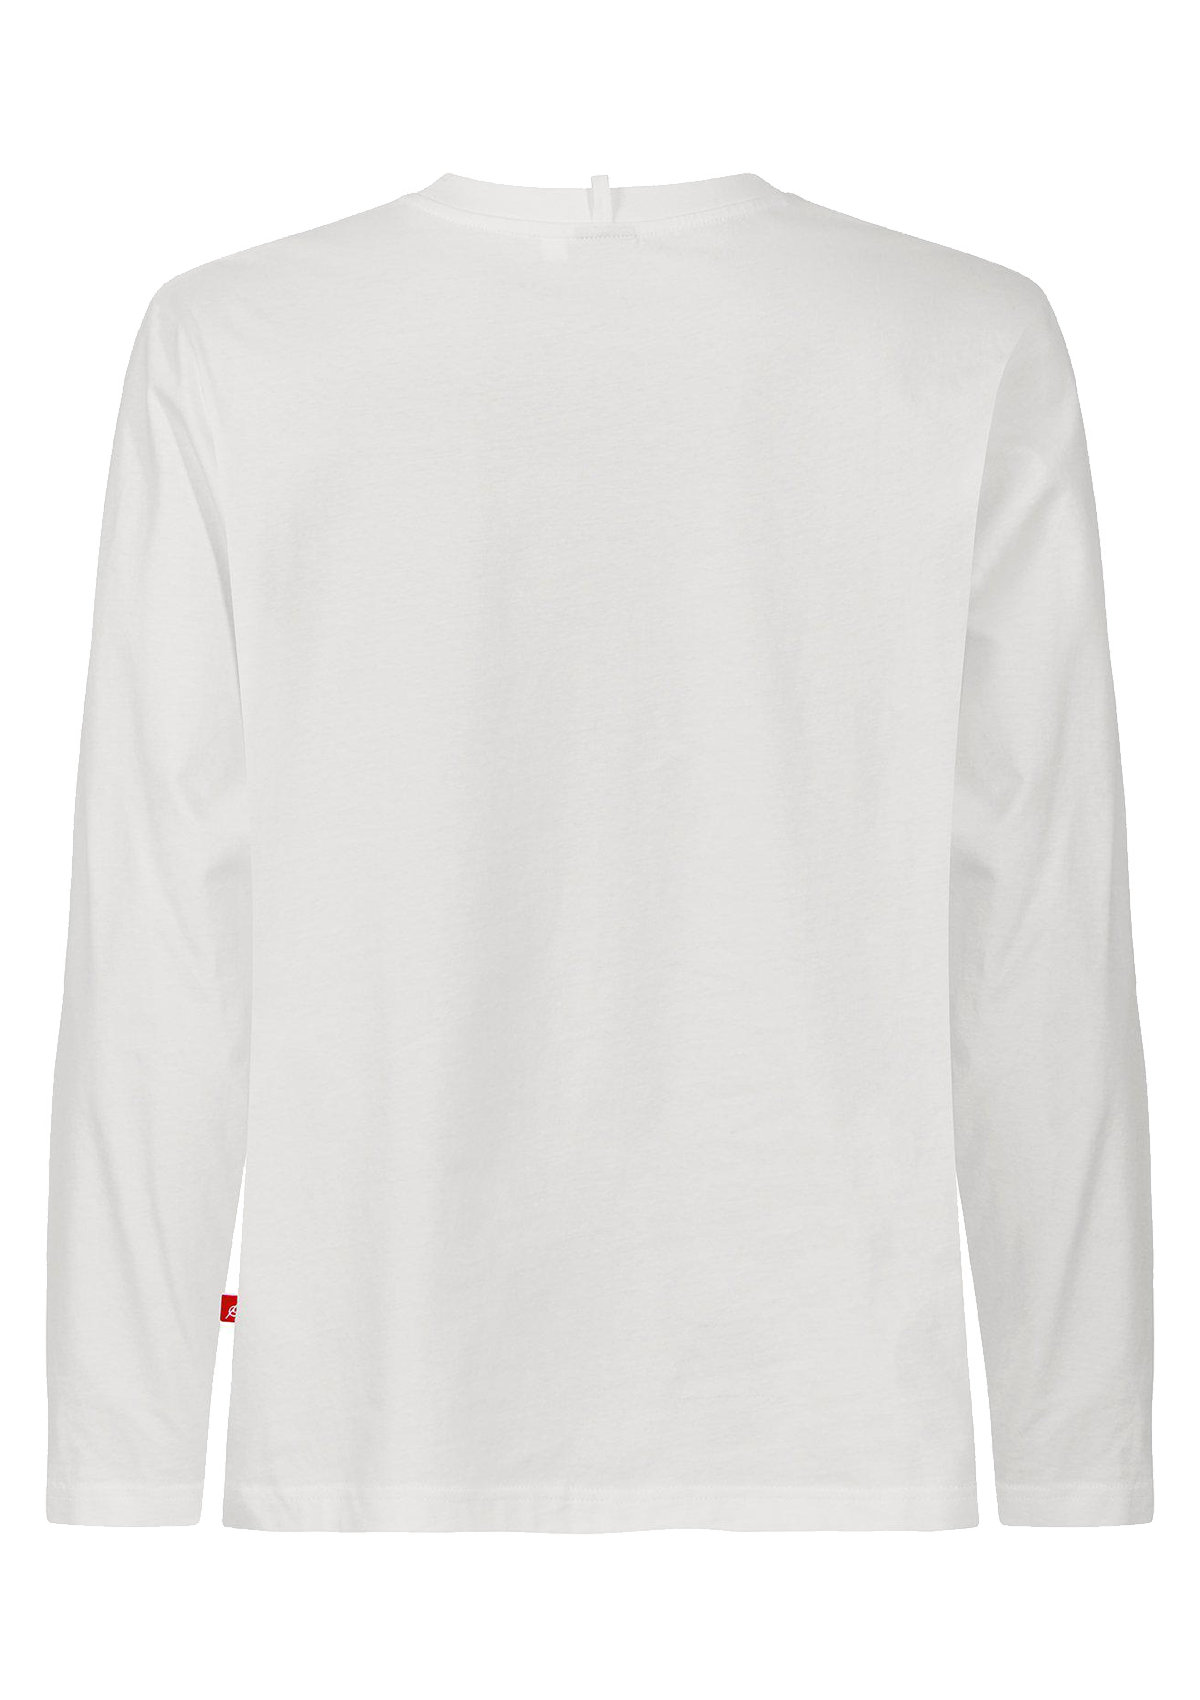 Unisex Long-sleeved Service T-shirt